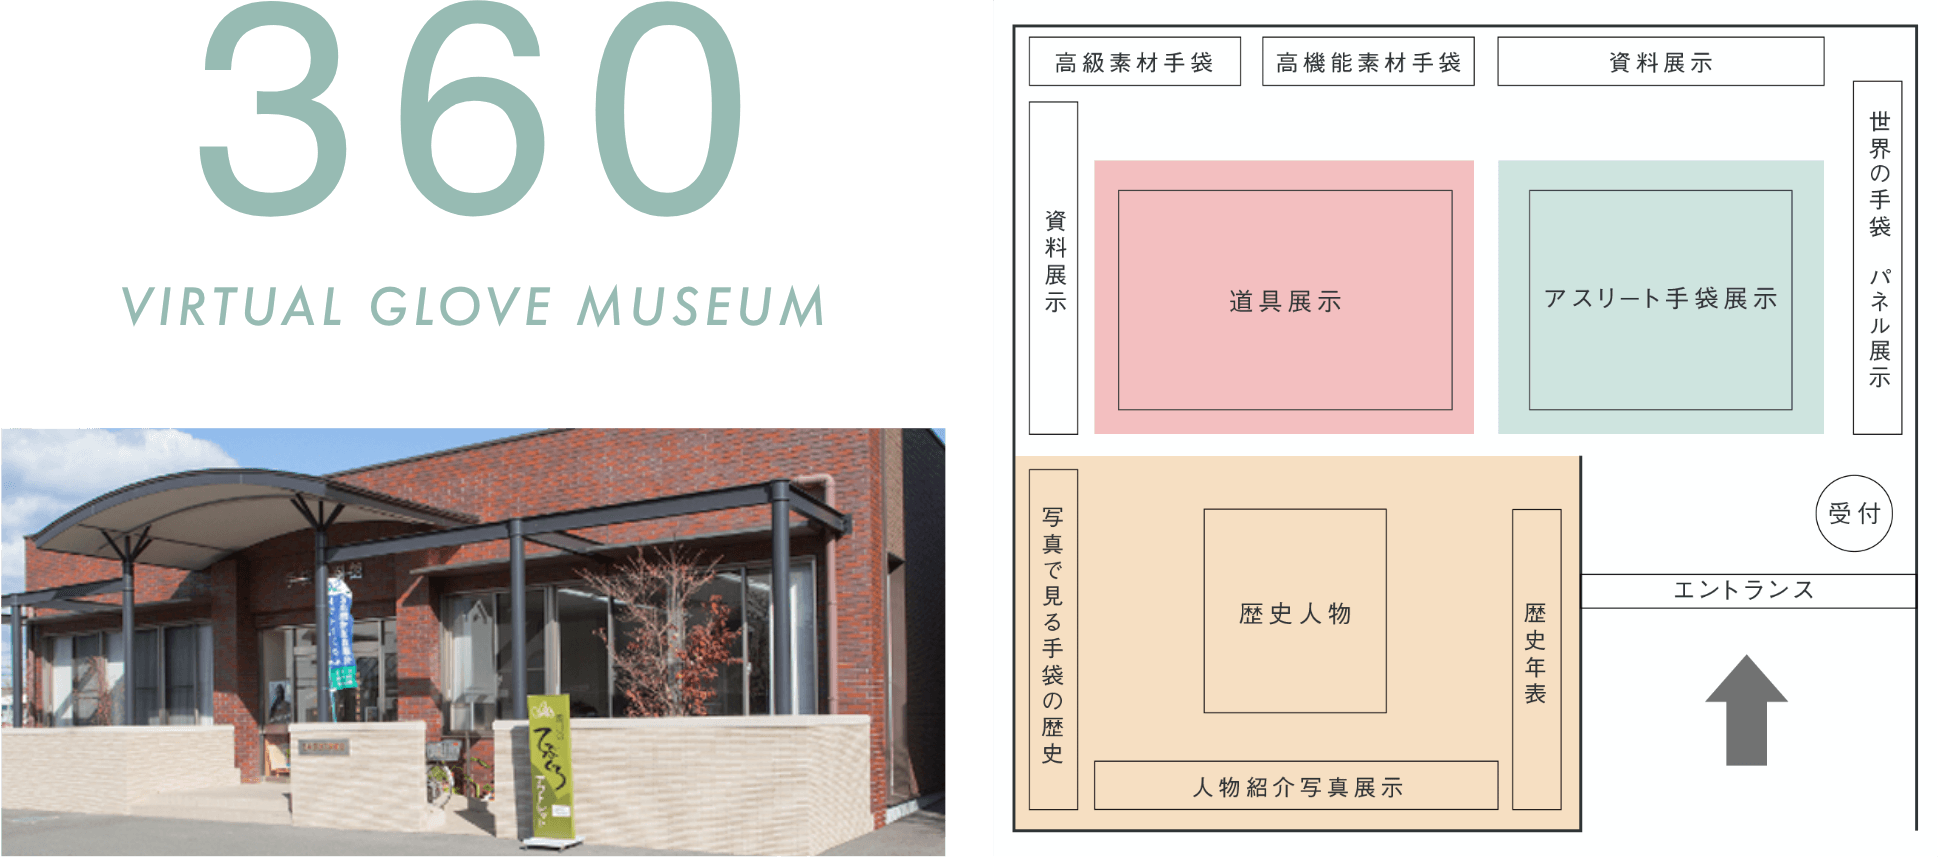 360 VIRTUAL GLOVE MUSEUM